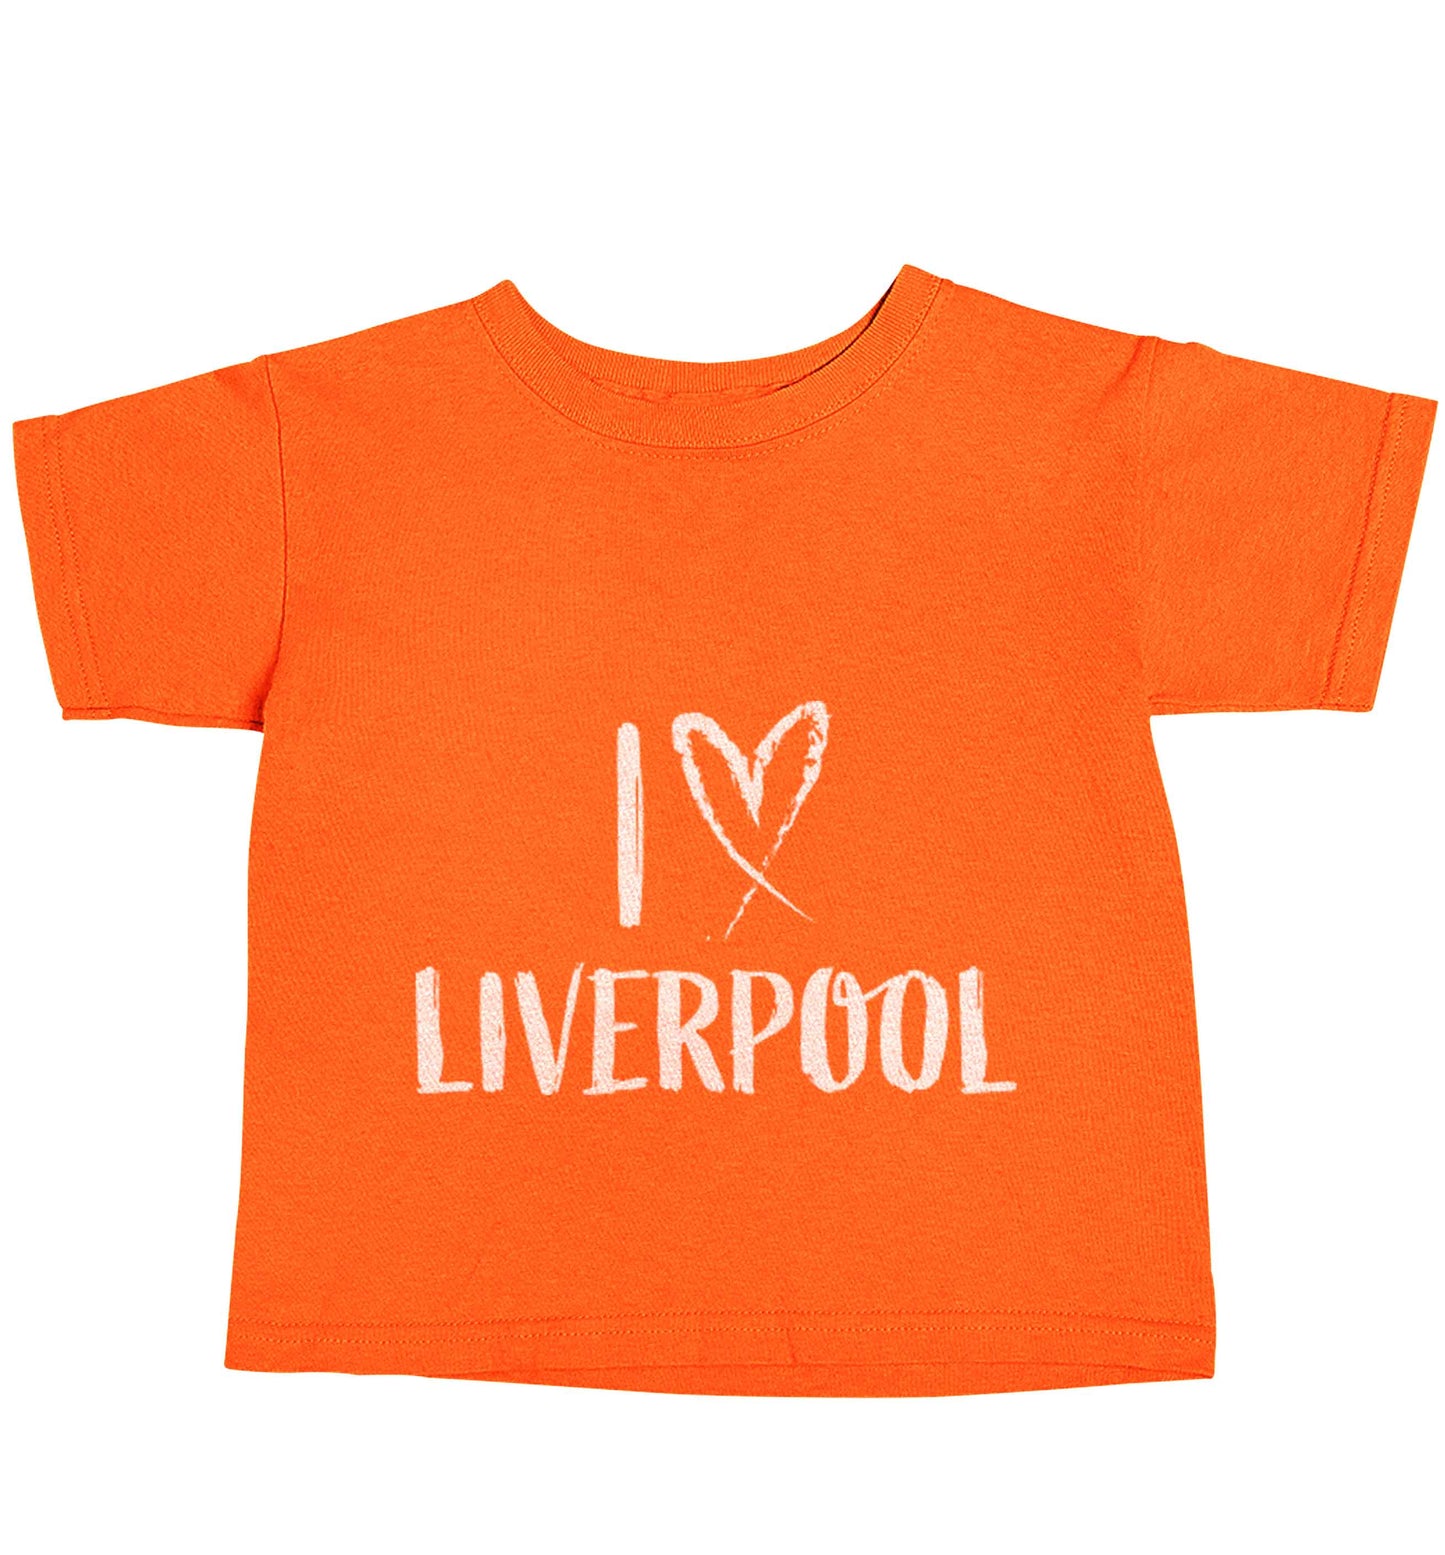 I love Liverpool orange baby toddler Tshirt 2 Years